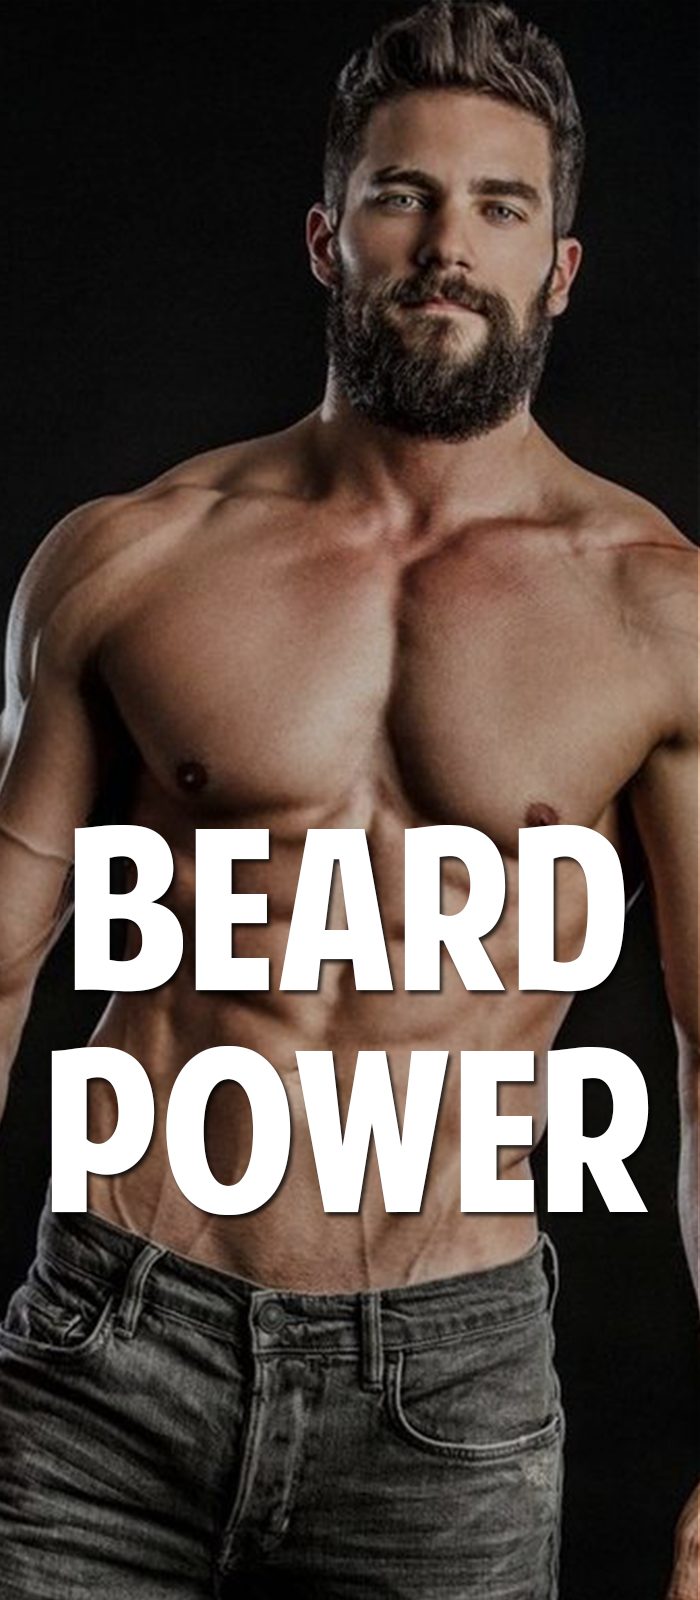 Beard-power